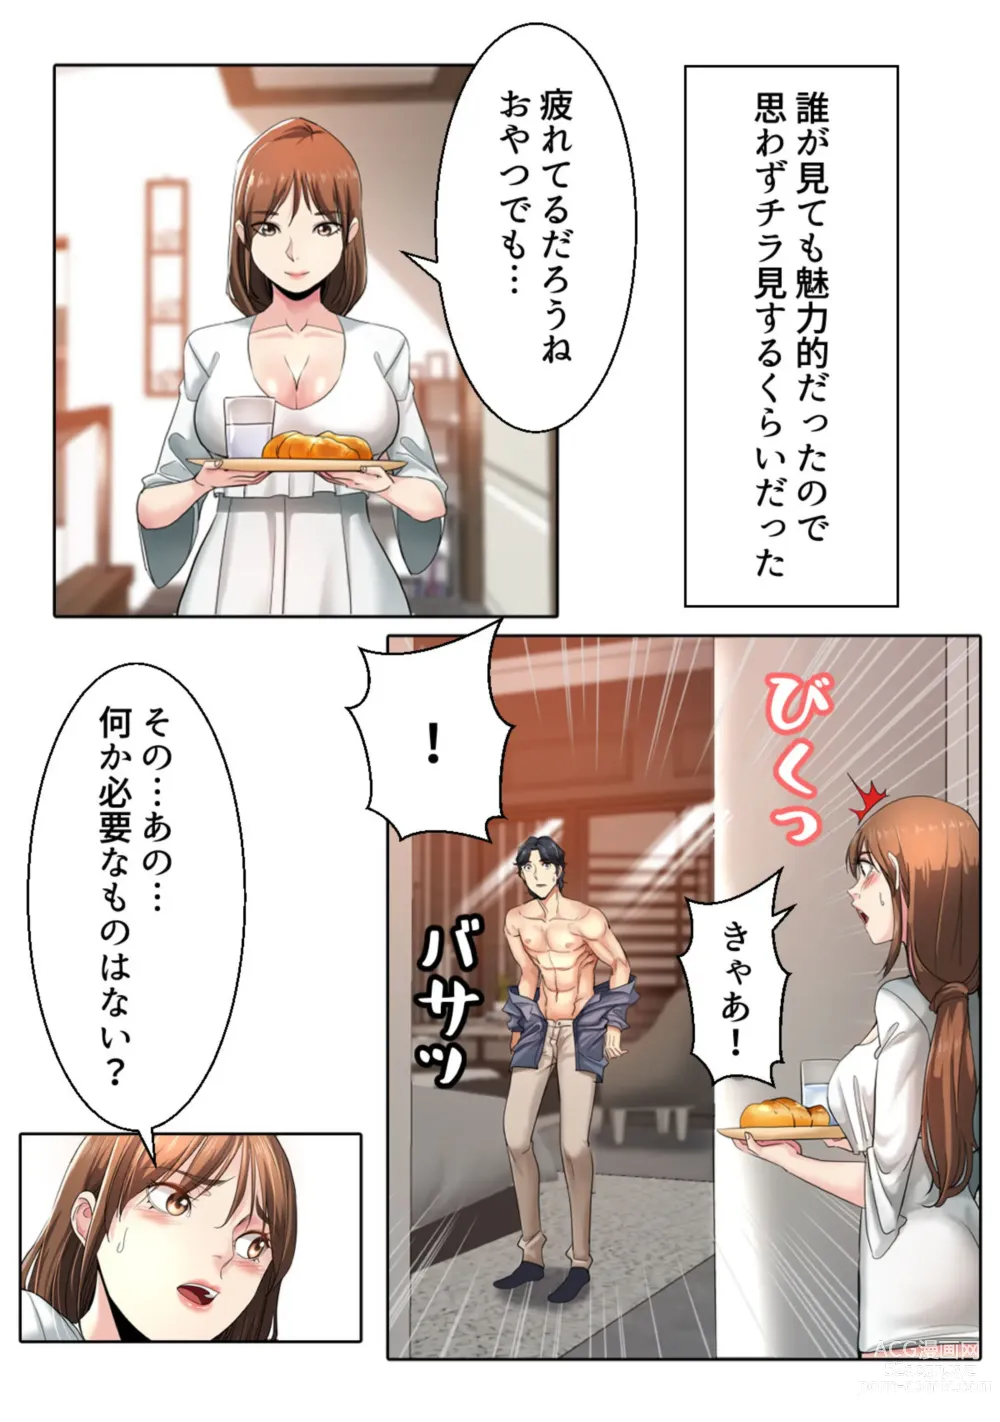 Page 4 of manga Ikemen Oikko to Miwaku no Yoga Ressun 1